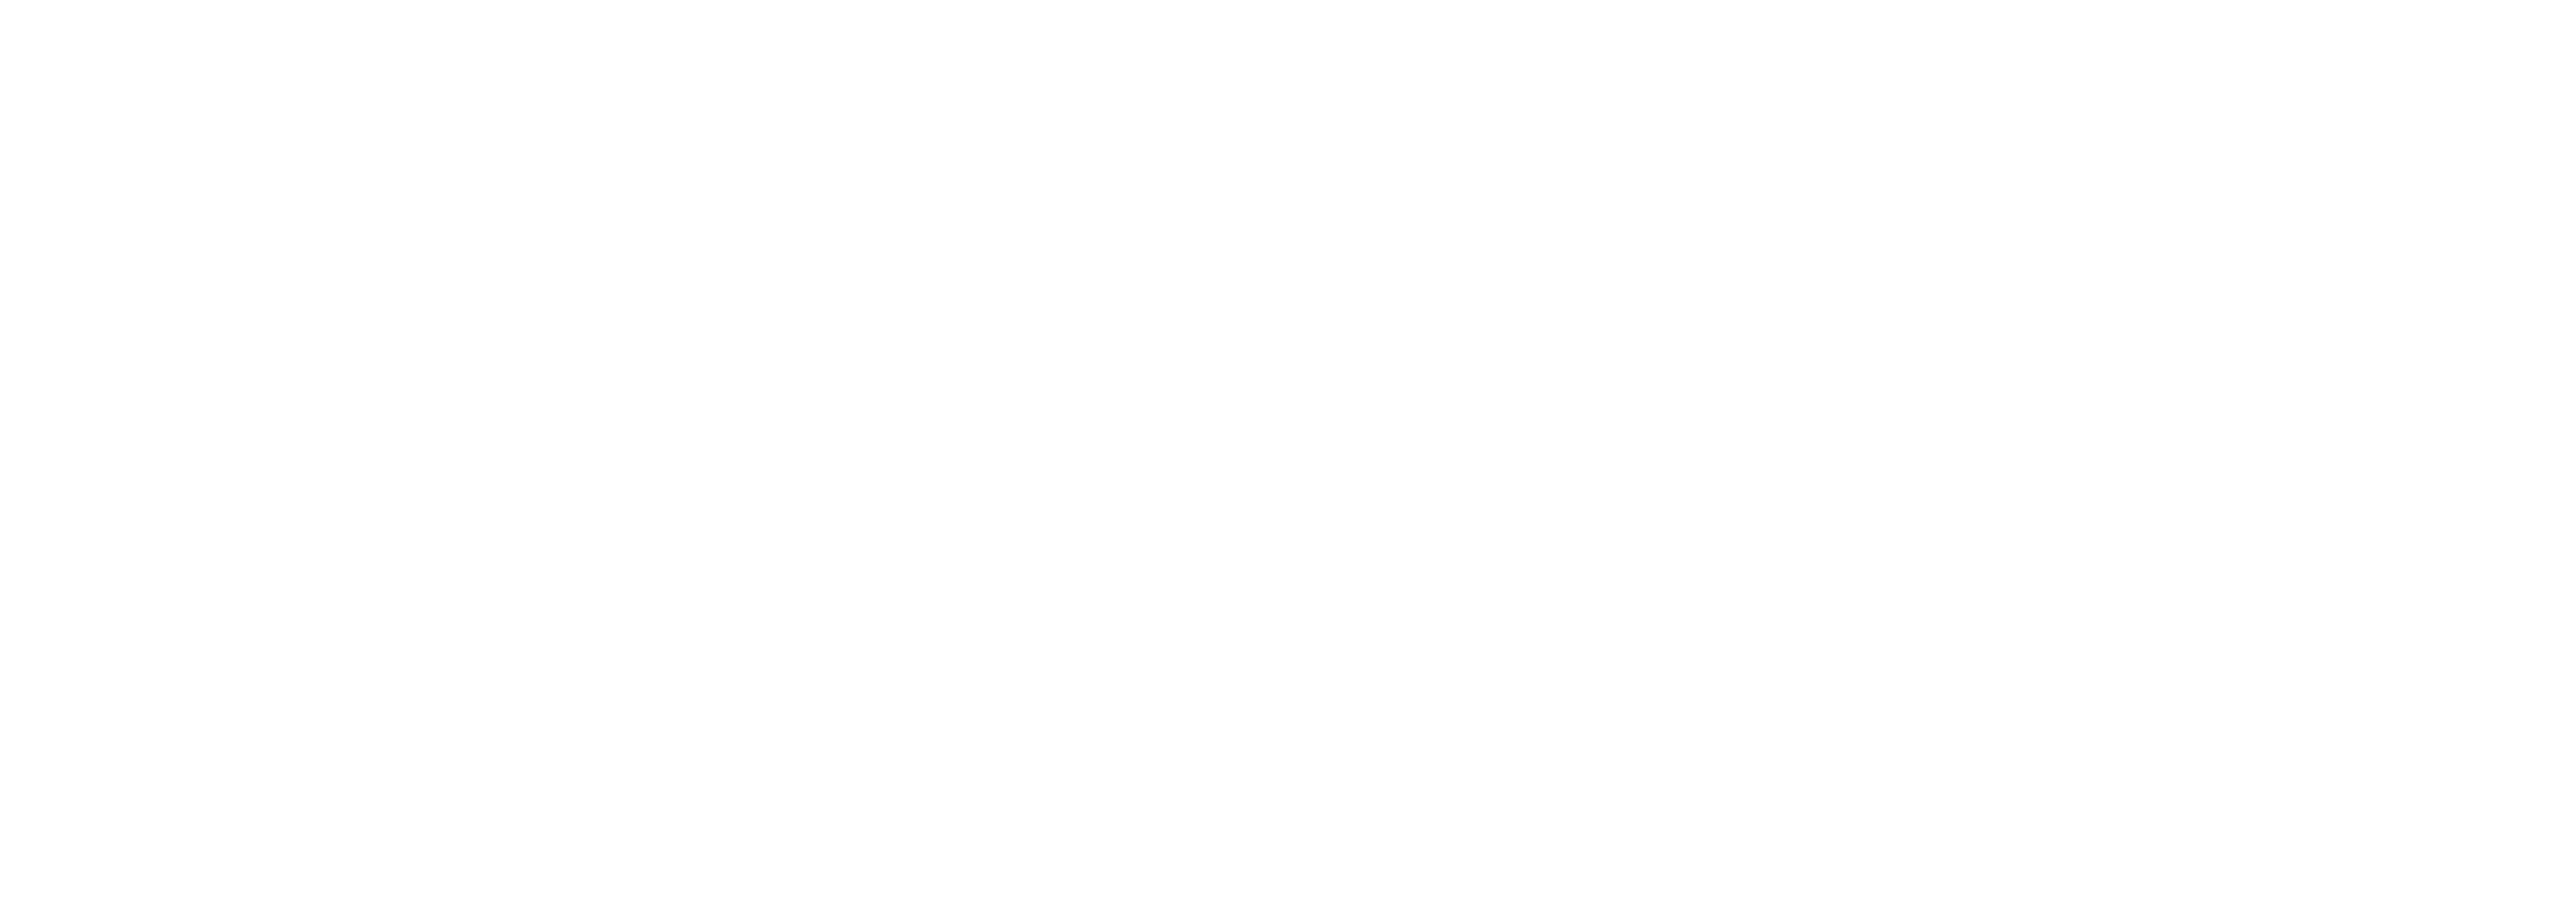 Radioimagen diagnóstica